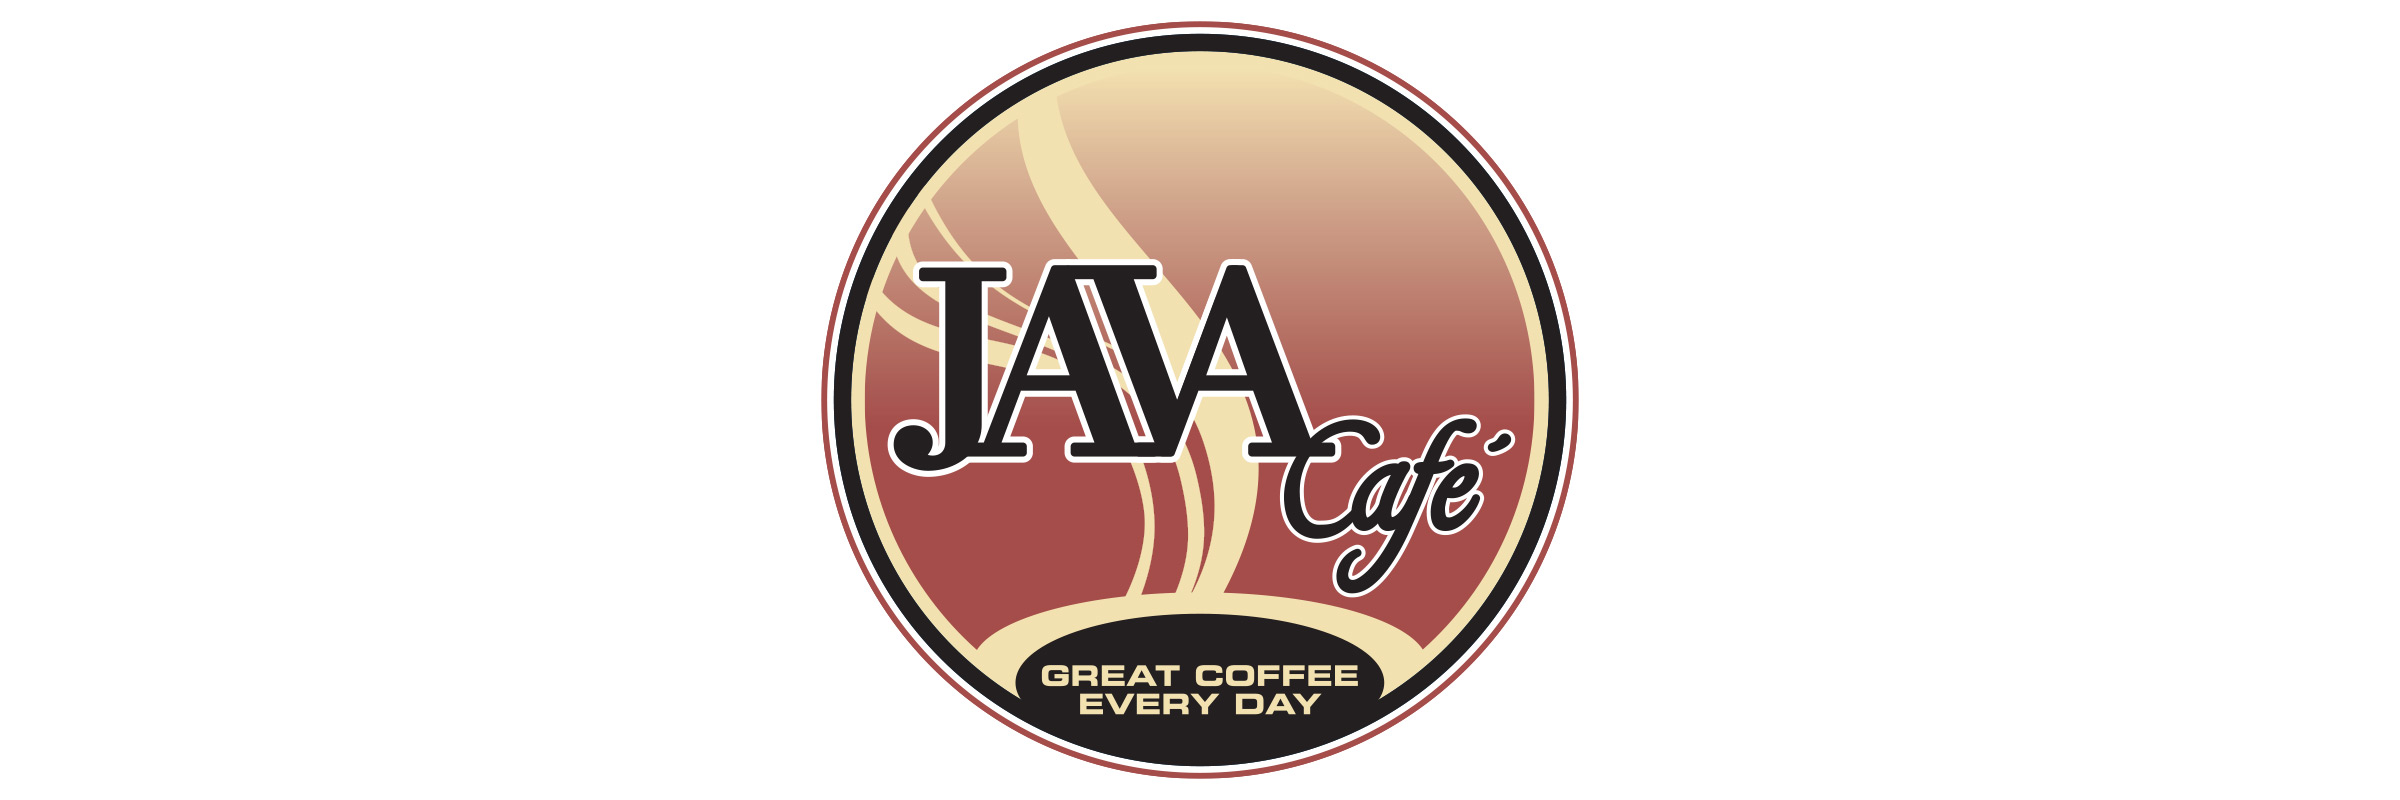 Java-Cafe-HiRez.jpg